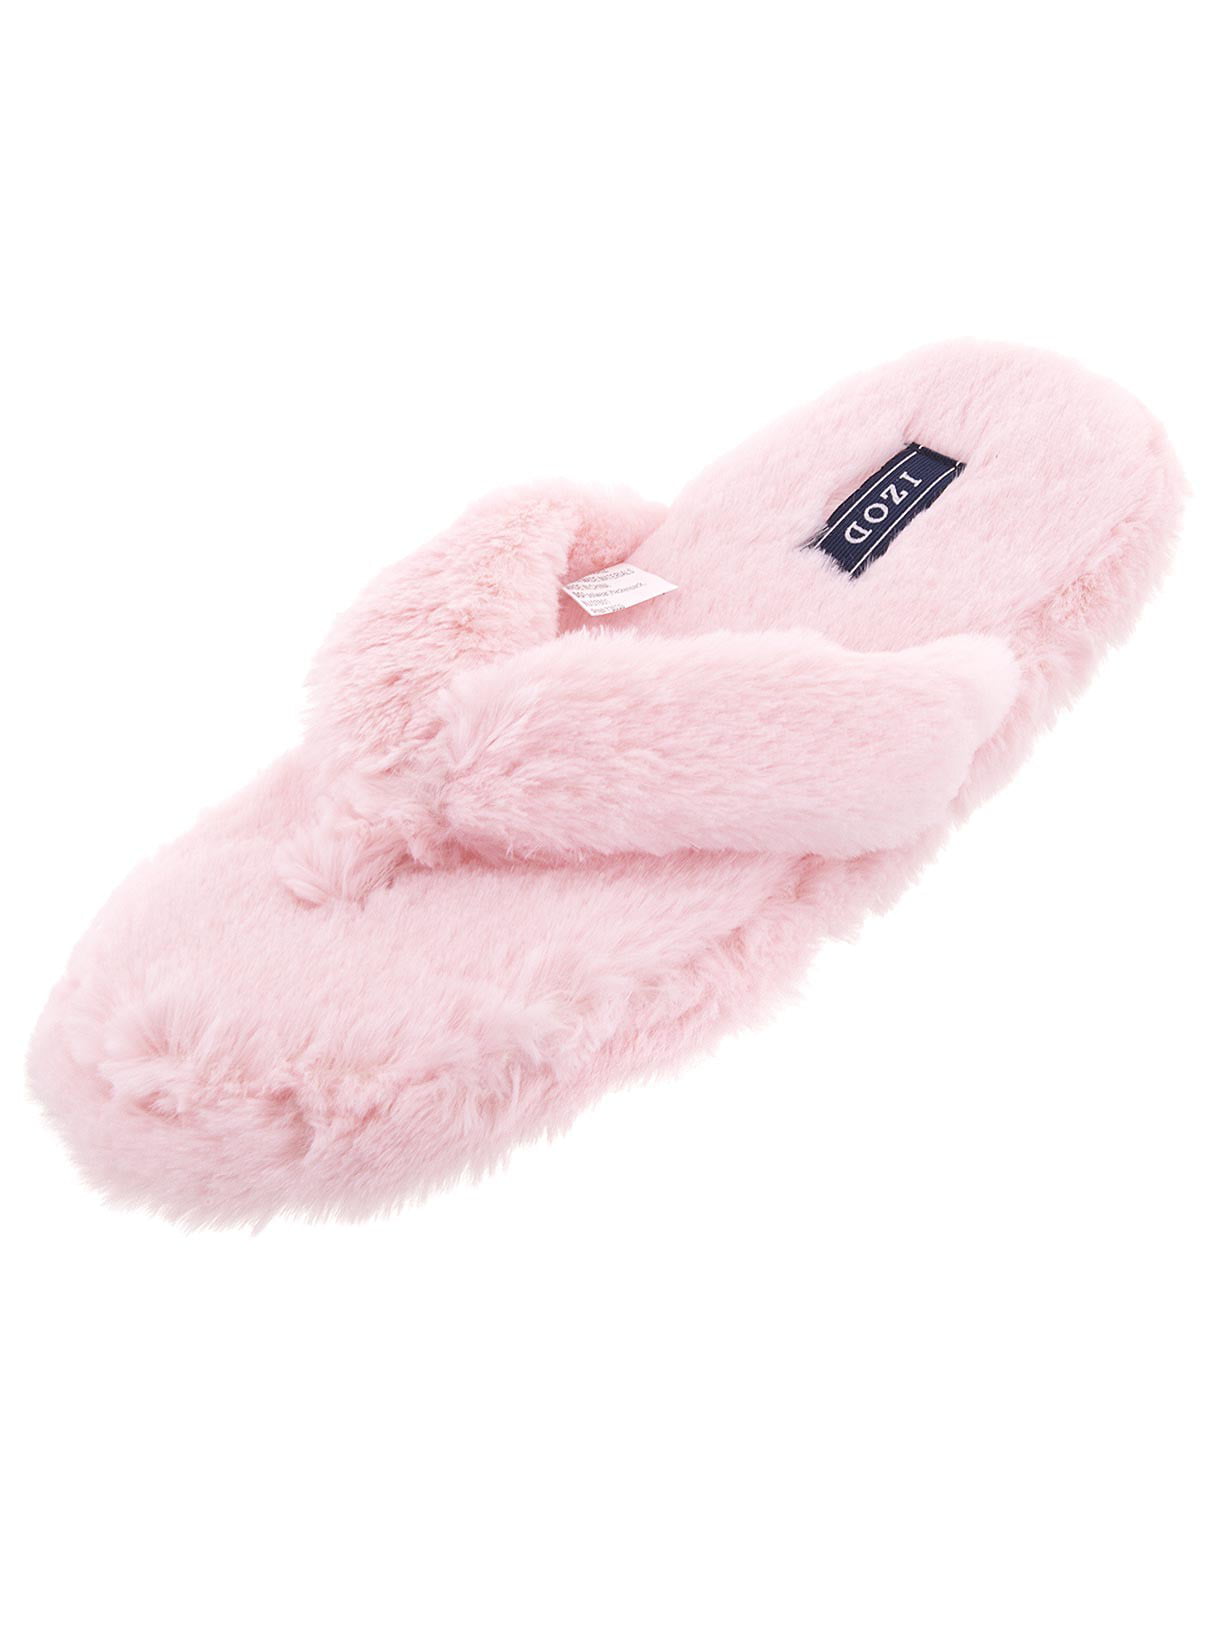 pink slippers walmart